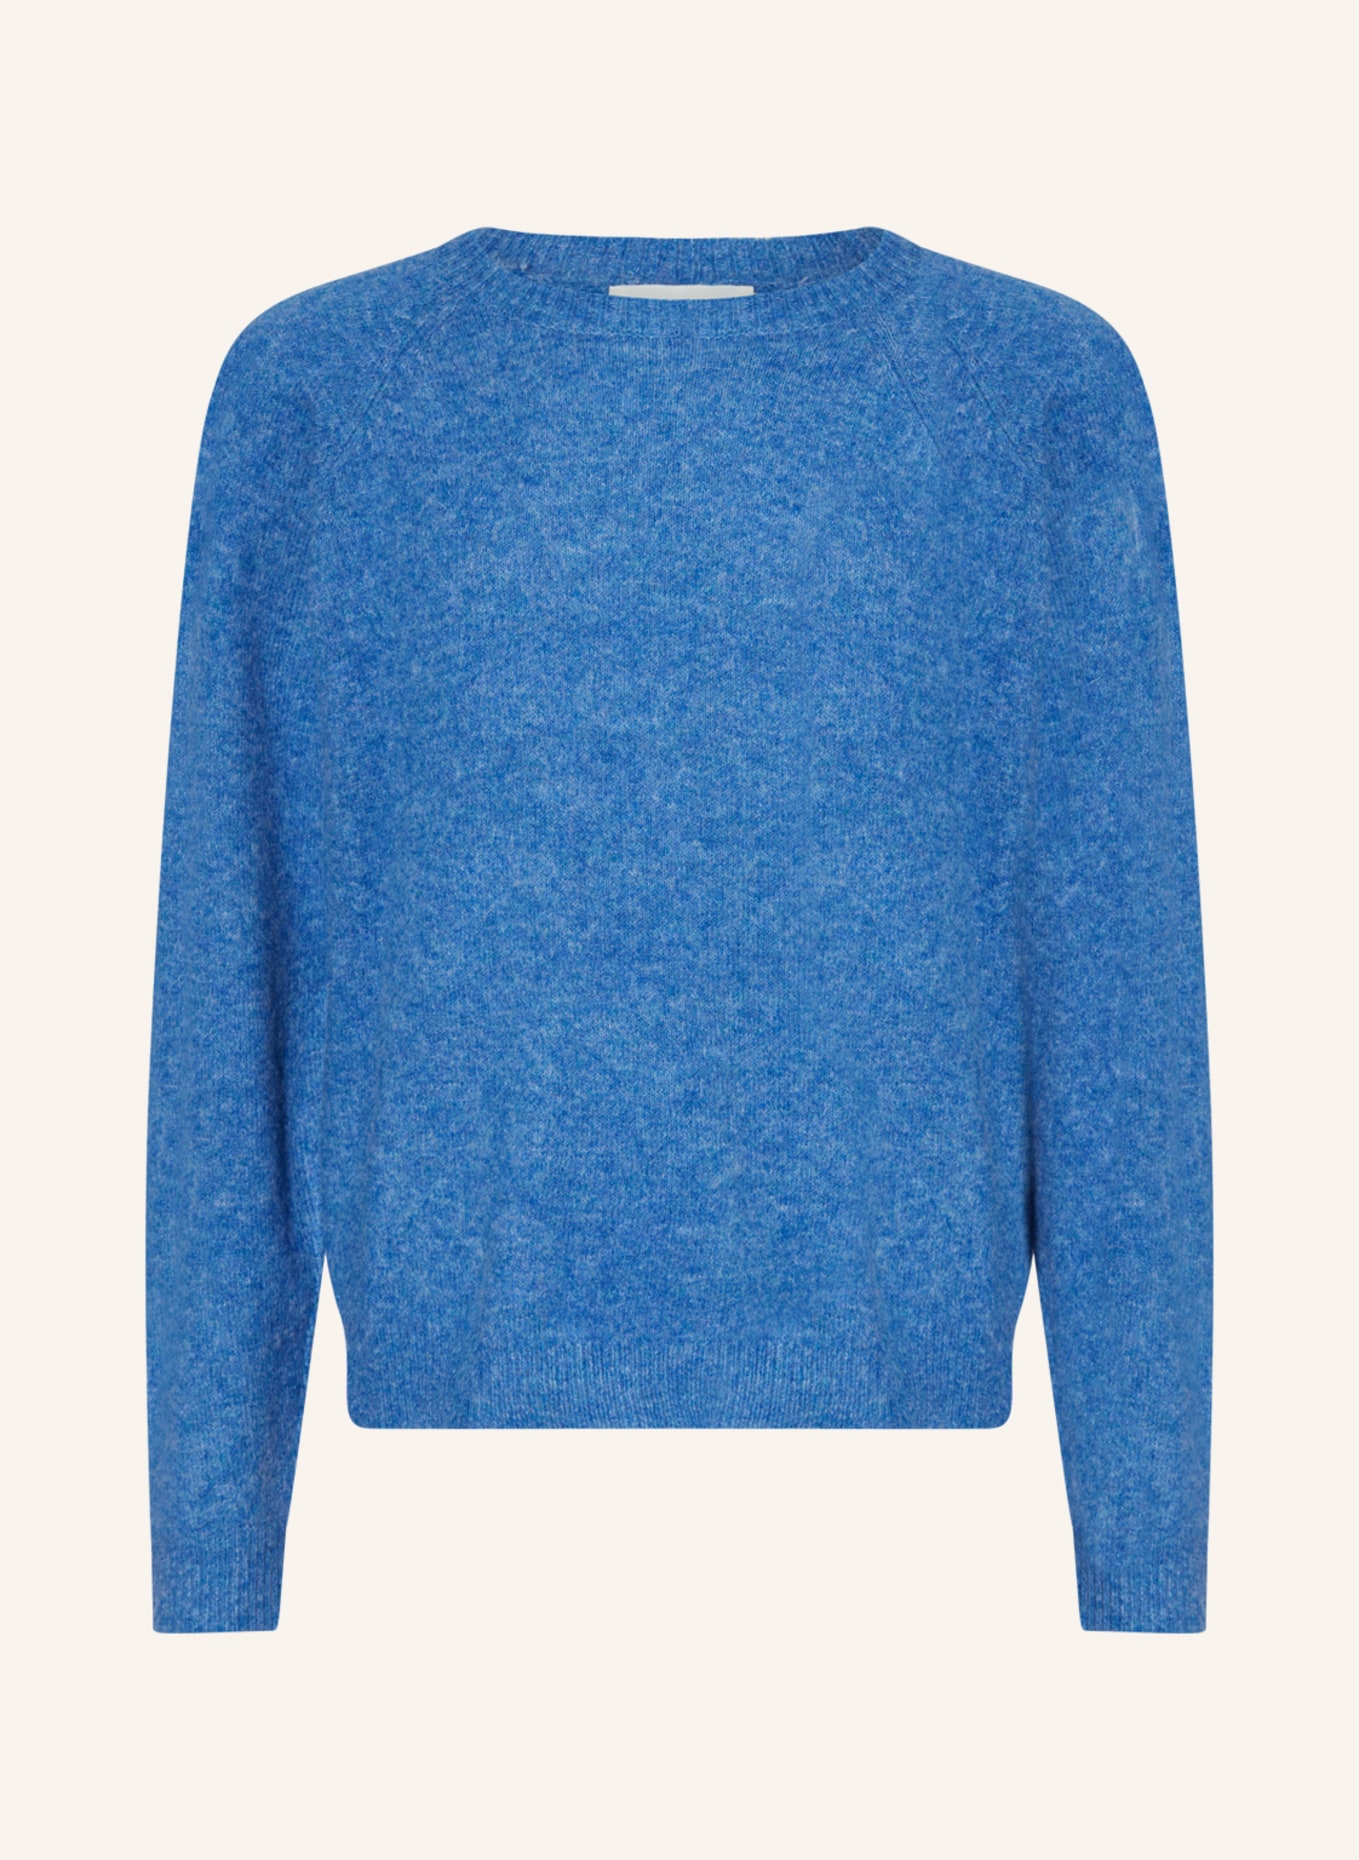 SOFIE SCHNOOR Pullover, Farbe: BLAU (Bild 1)